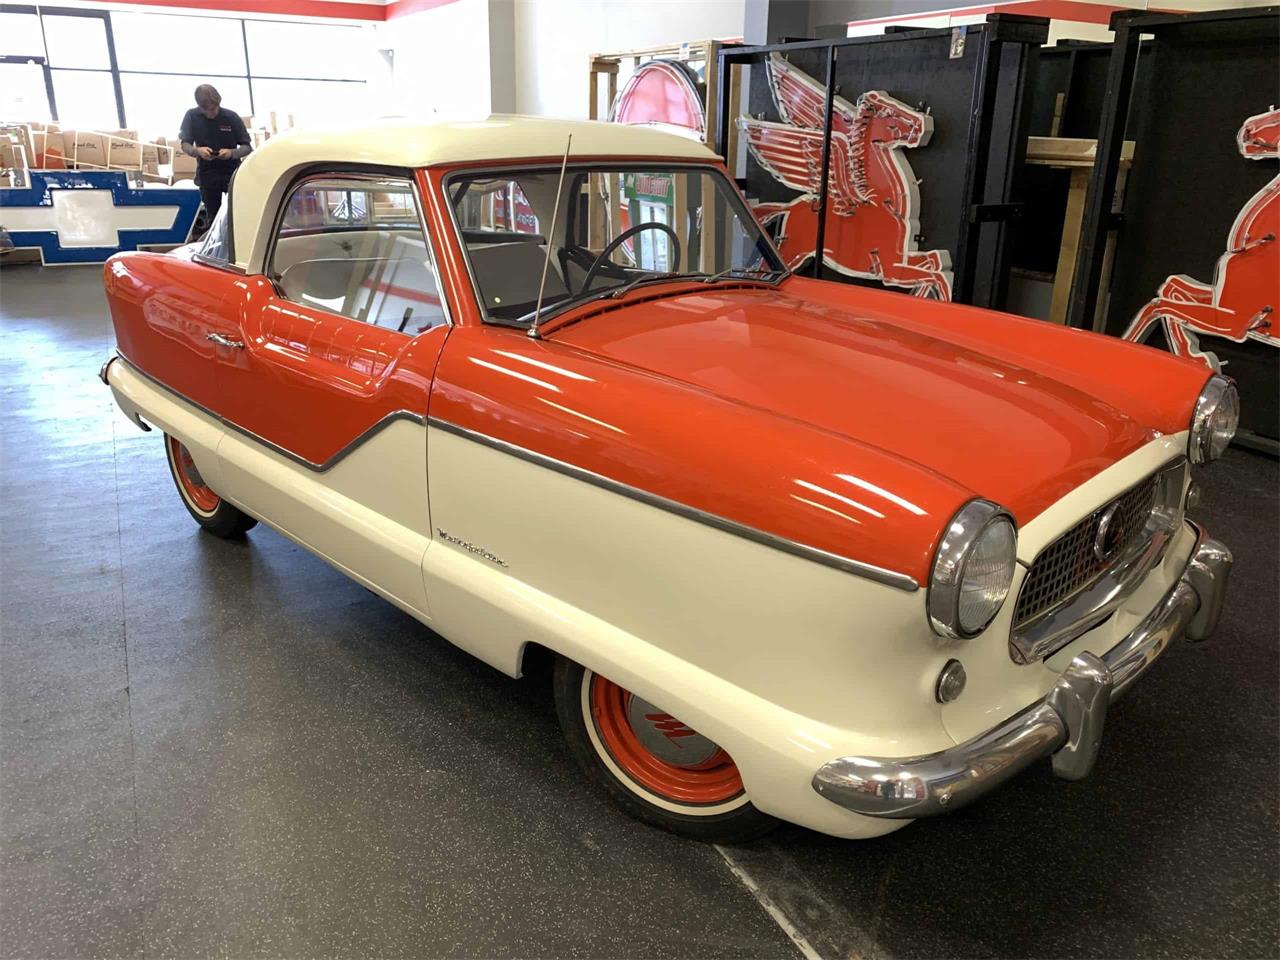 1957 Nash Metropolitan for sale in Pittsburgh, PA ...